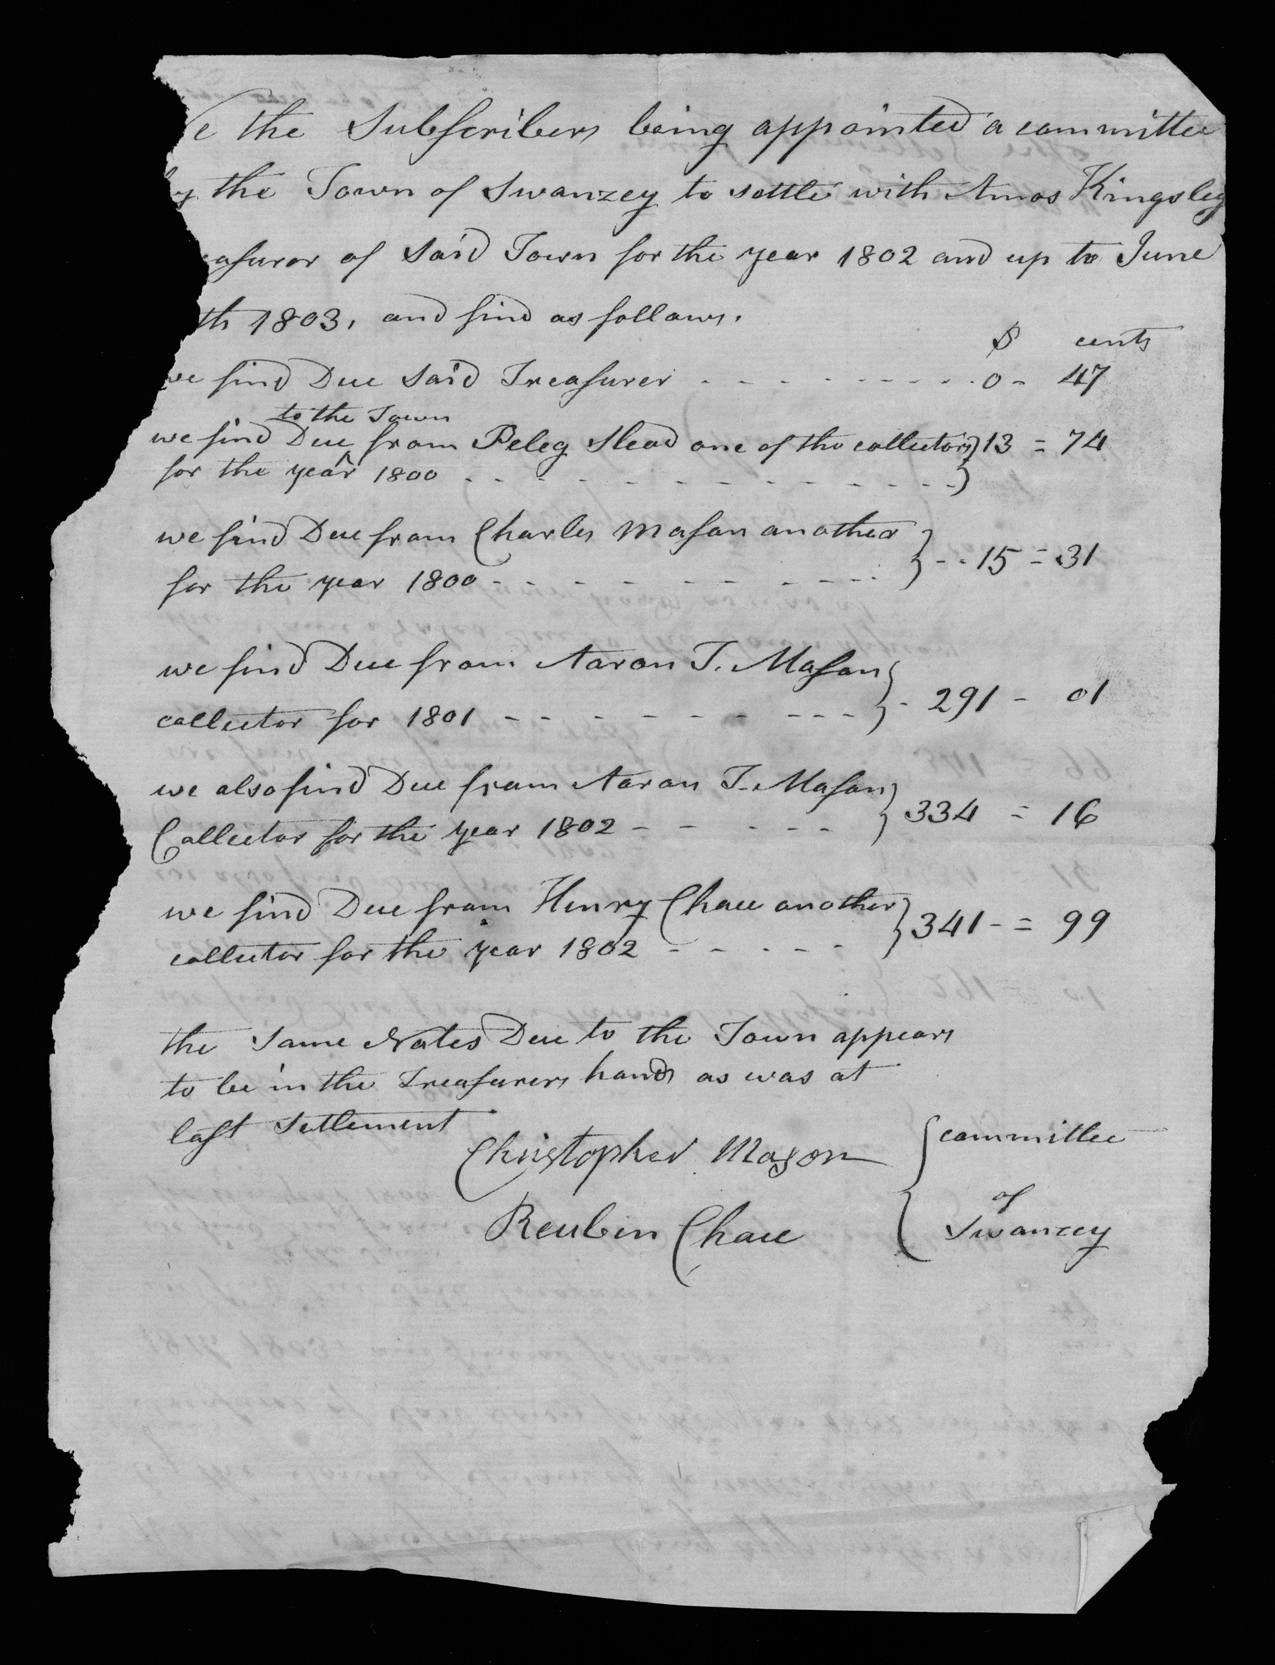 Christopher Mason, Reuben Chase, Treasury Account Settlement, Recto